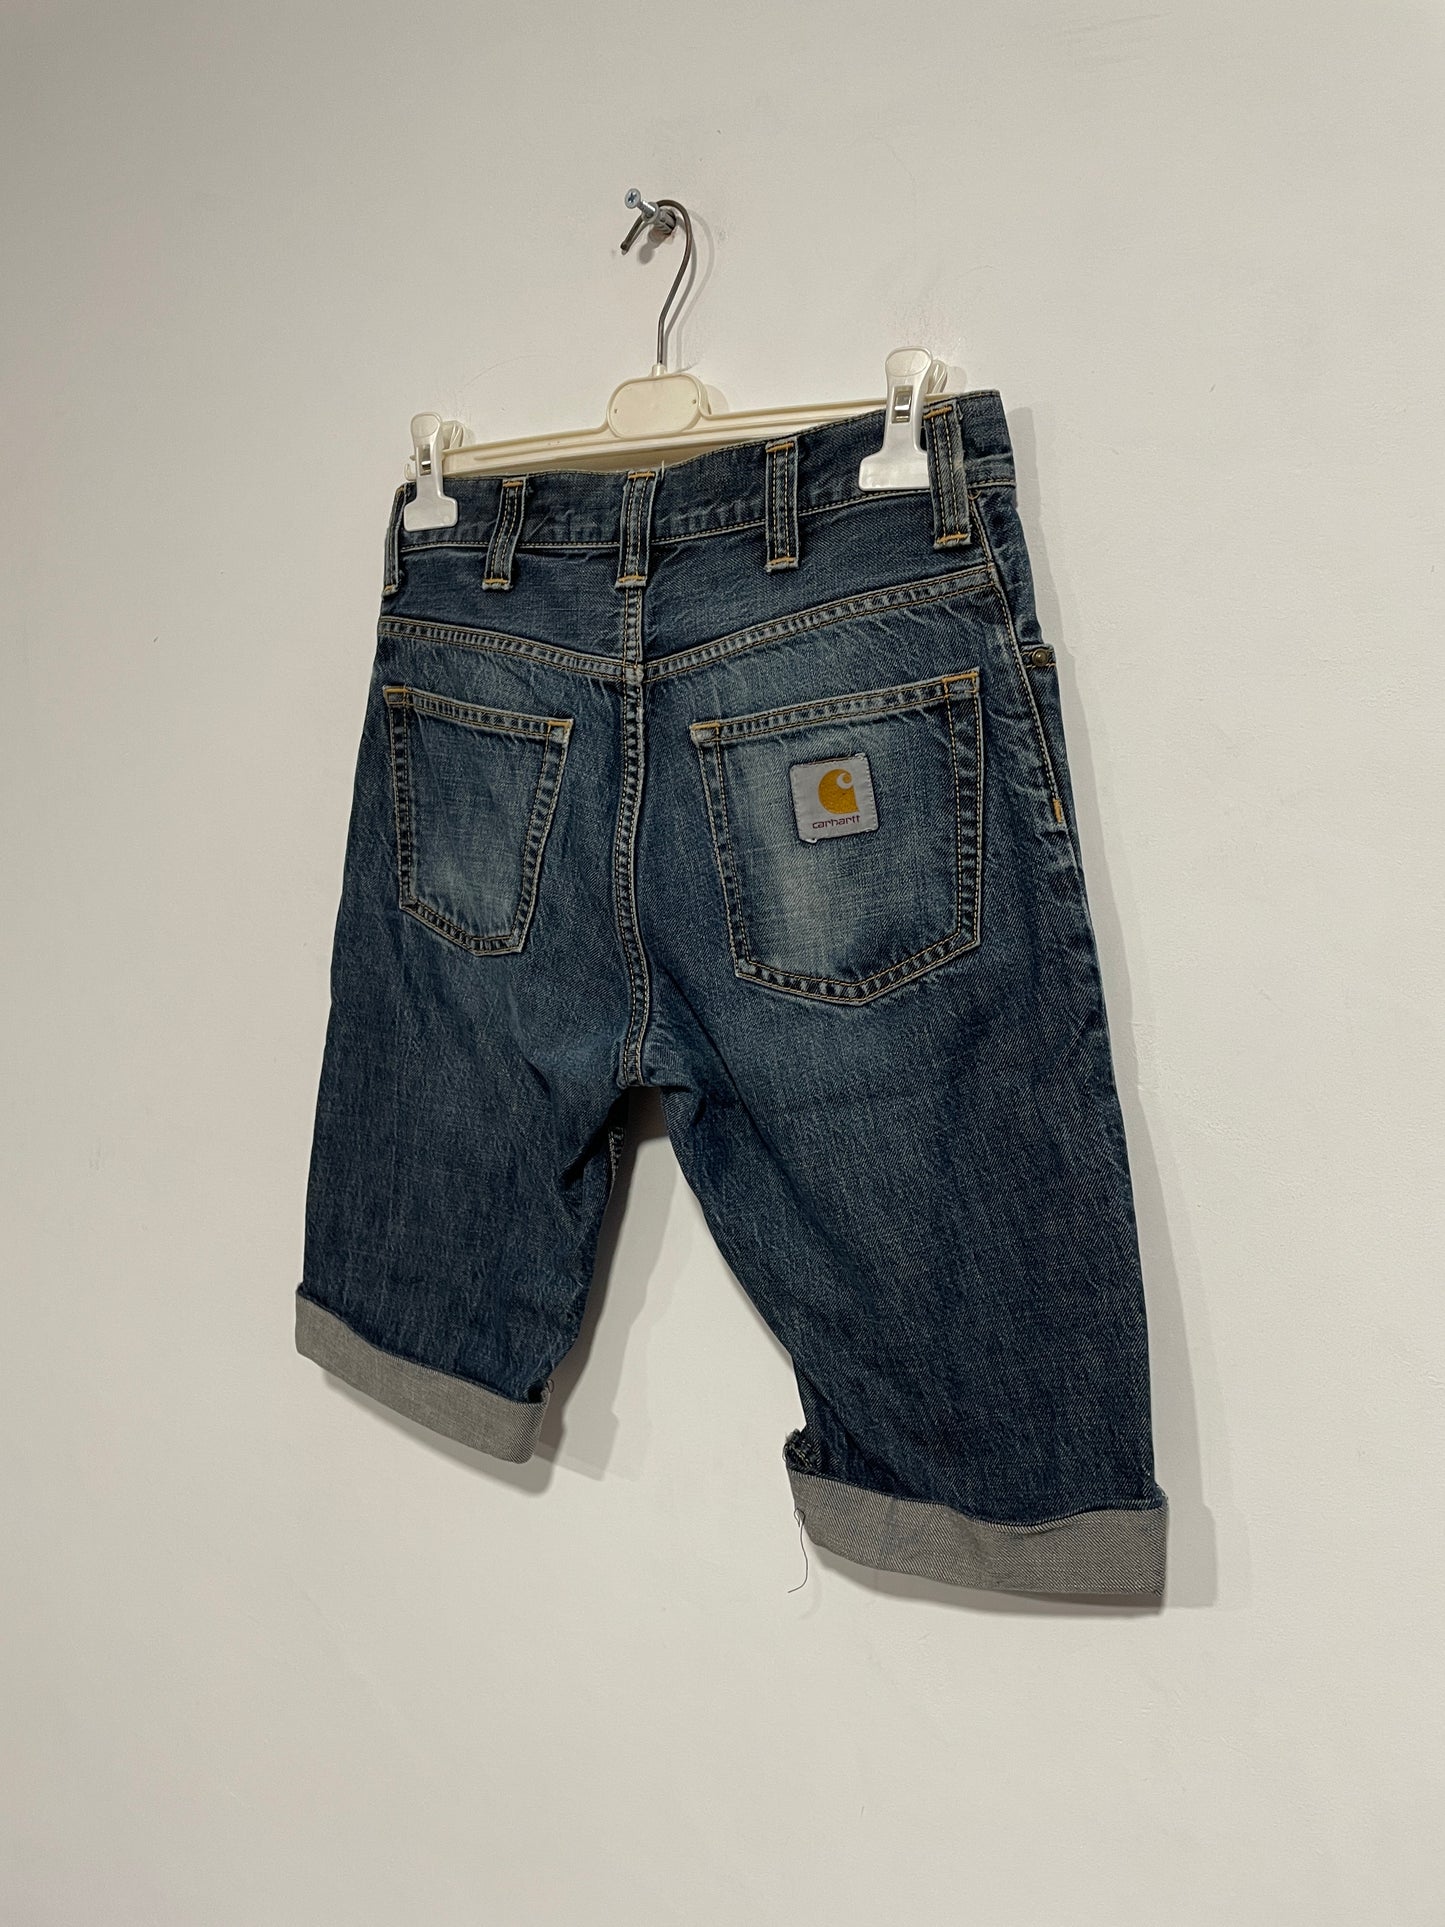 Shorts carhartt in jeans (B960)